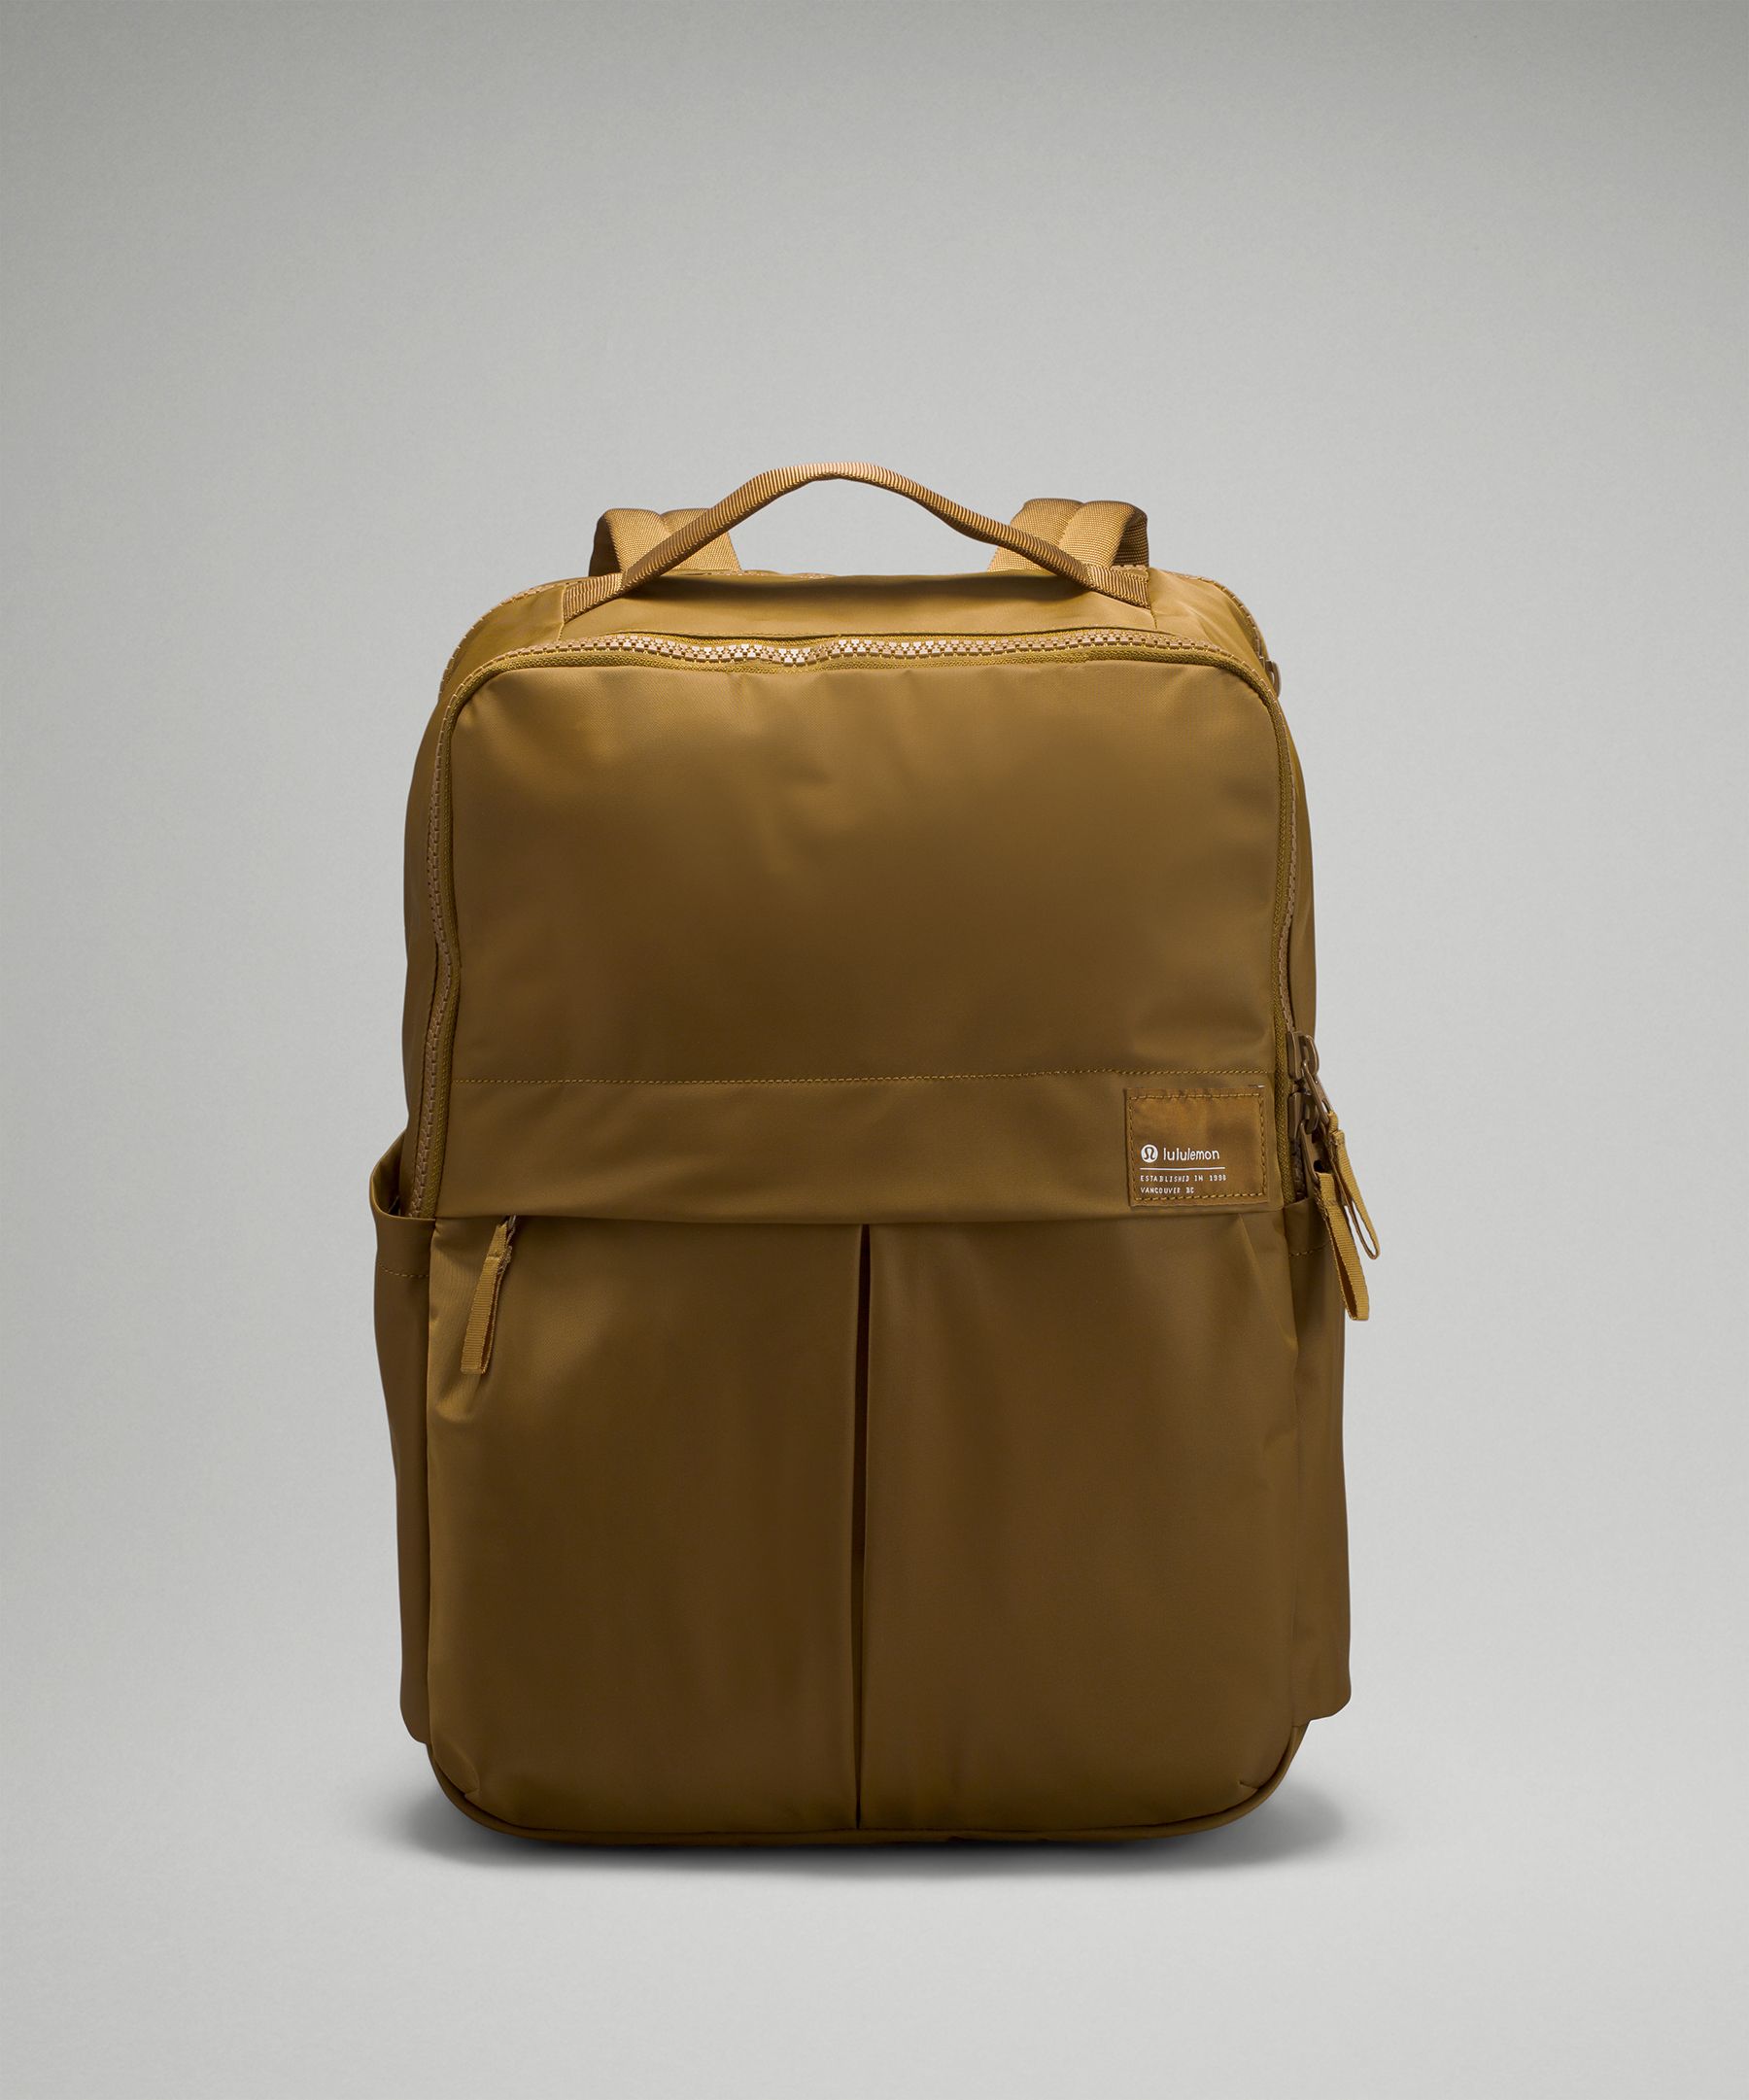 Lululemon Everyday Backpack 2.0 23L - Rainforest Green - NWT! Rare